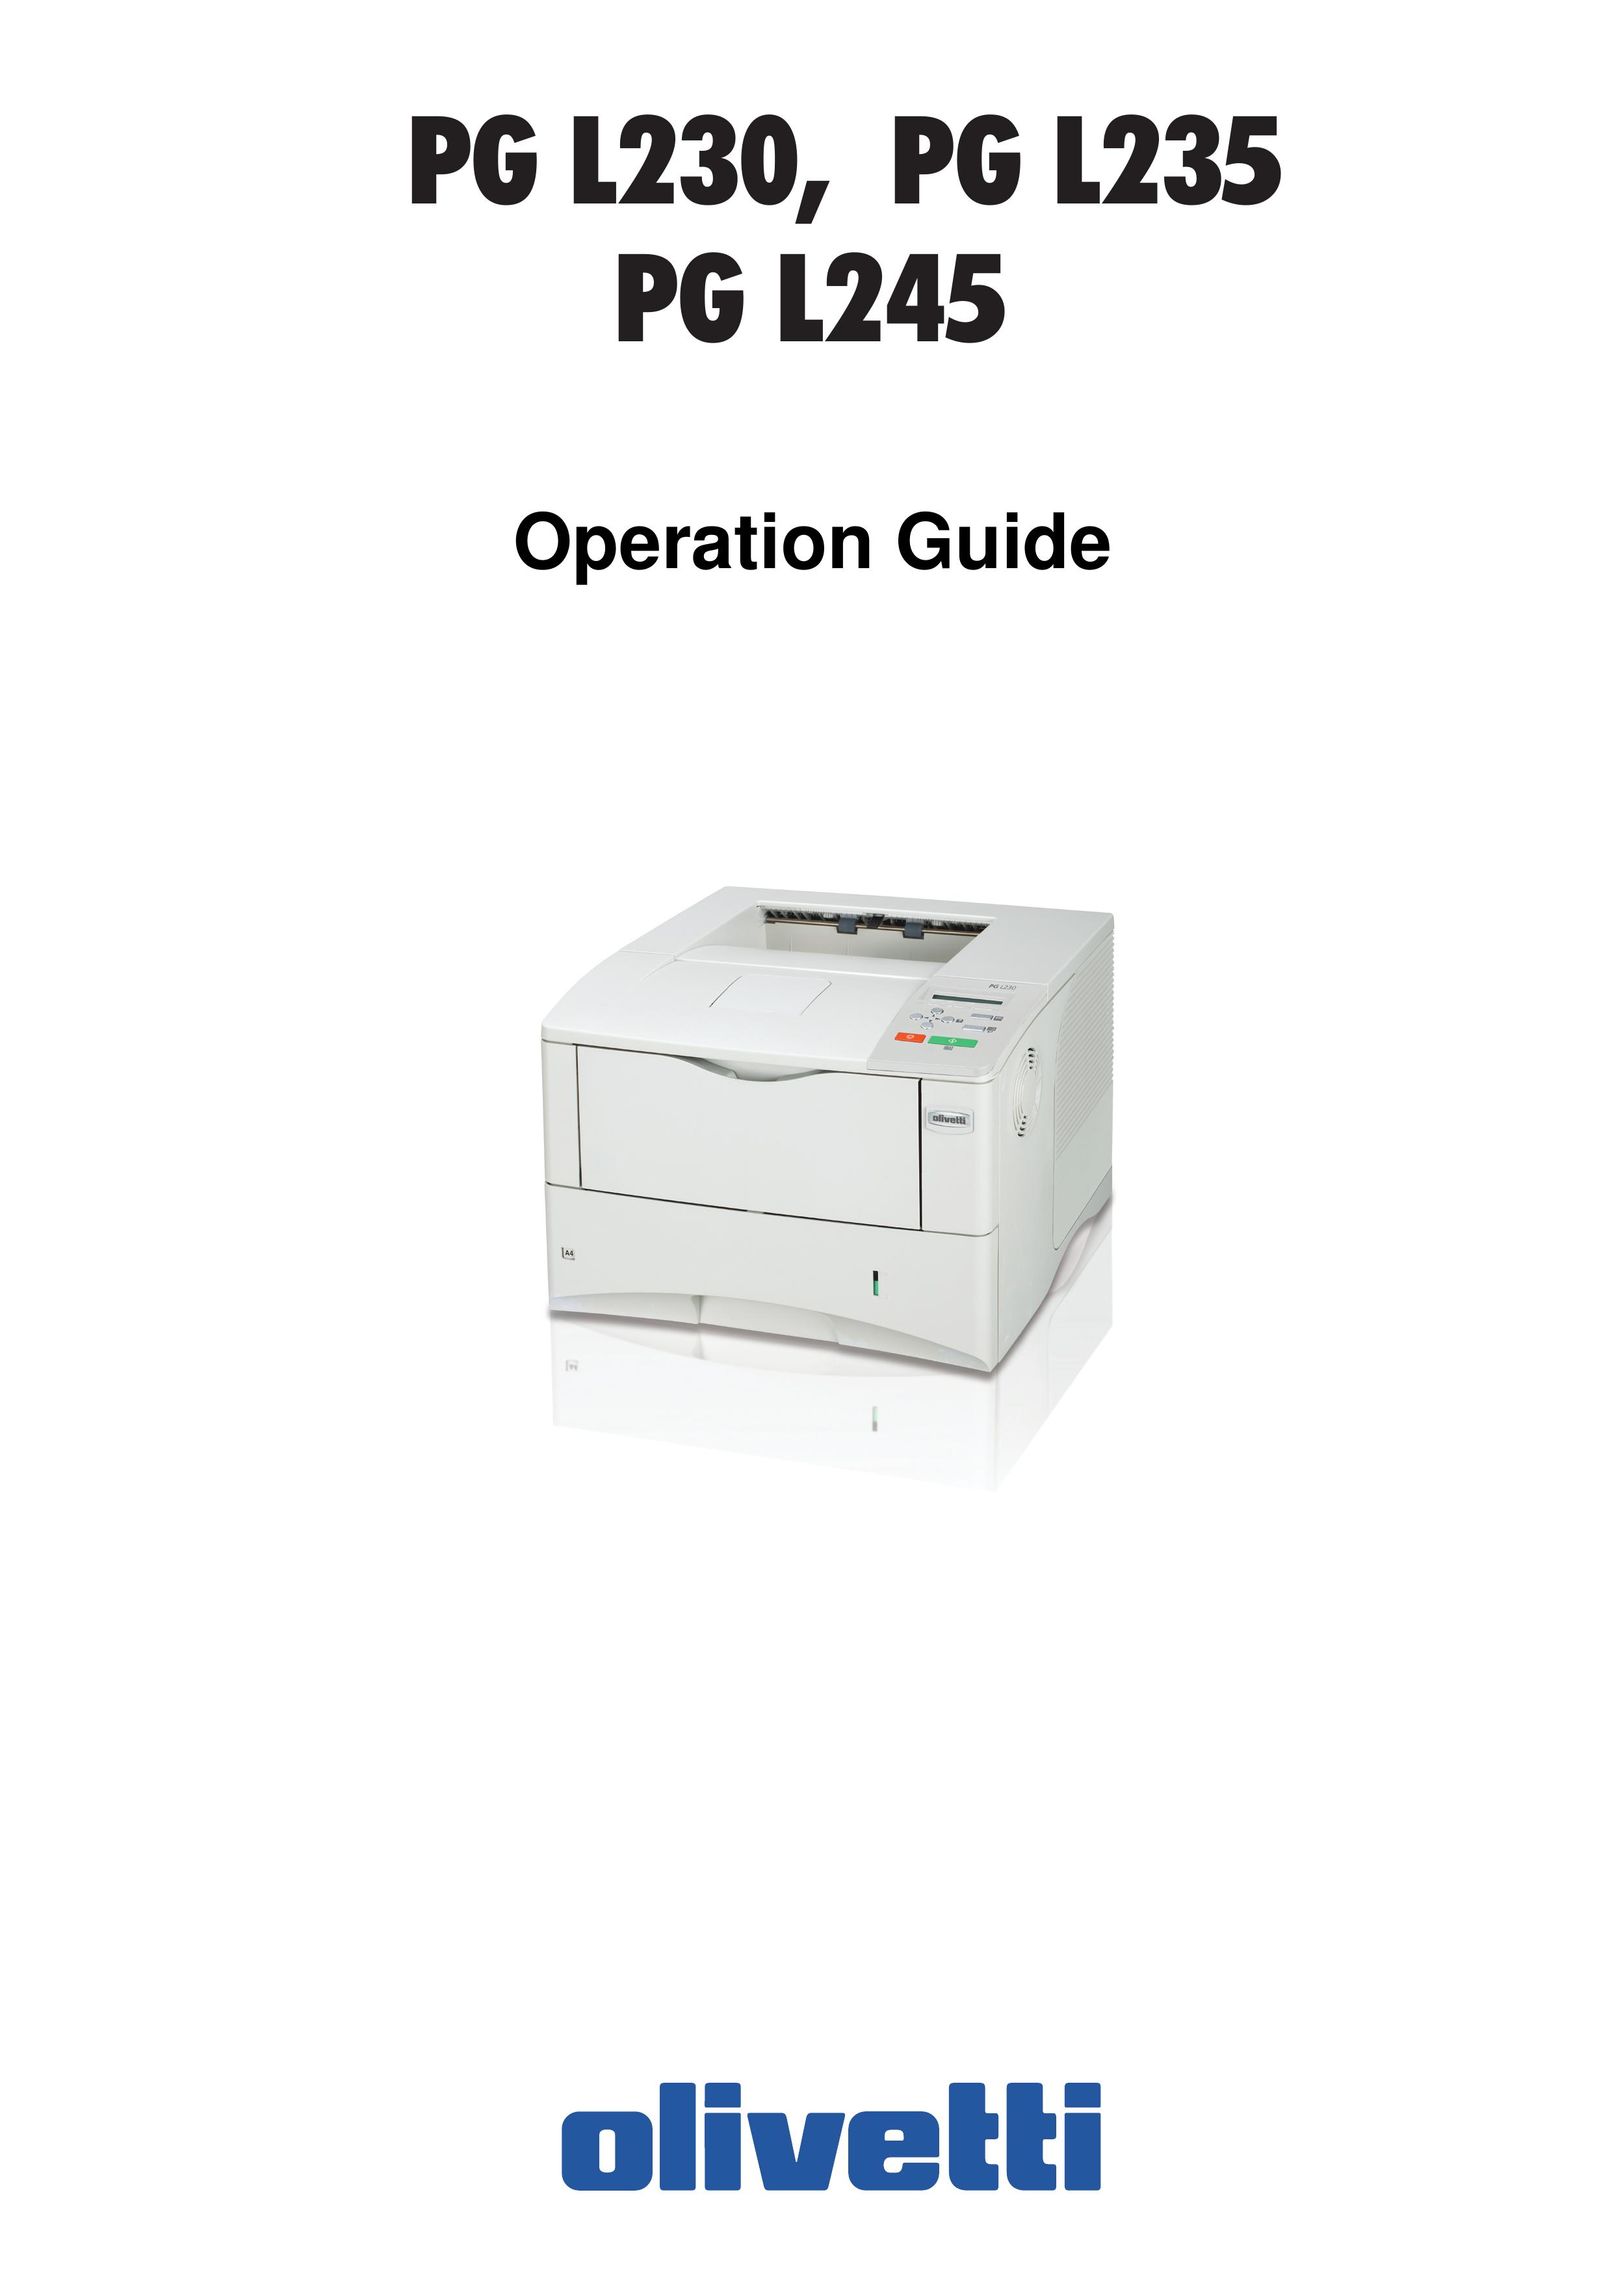 Olivetti PG L235 Printer User Manual